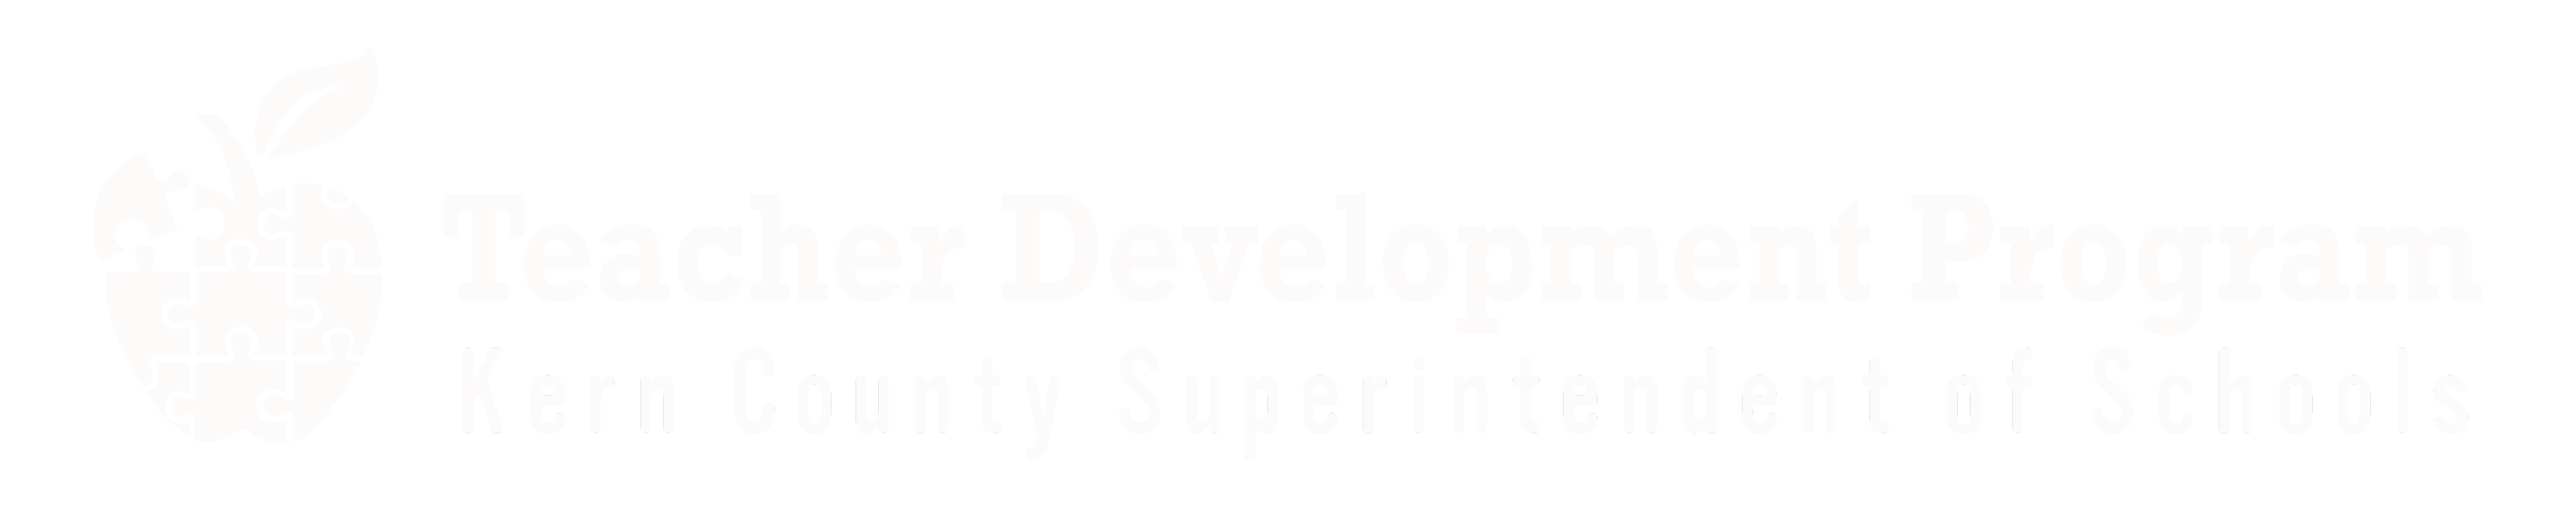 Teacher Development Program Logo